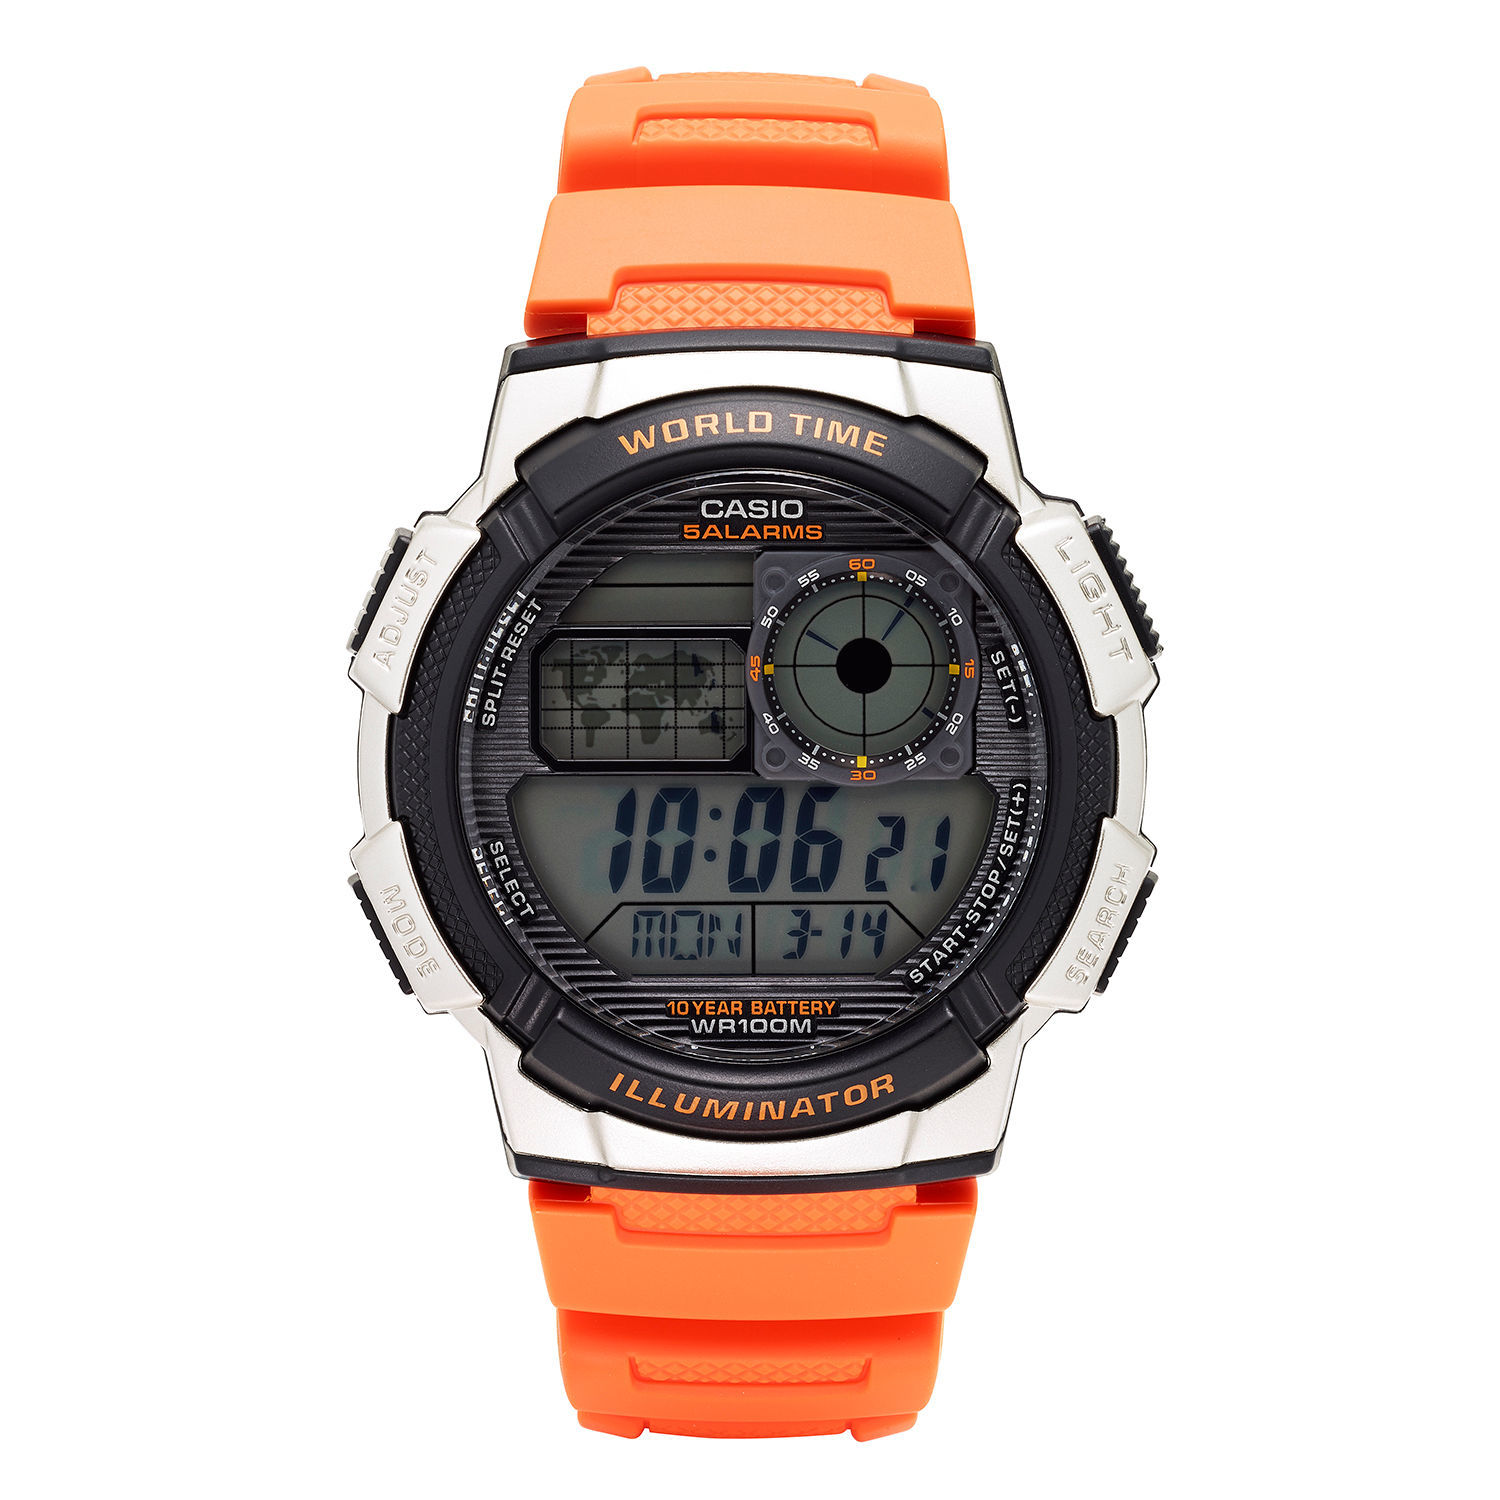 Casio Men's '10-Year Battery' Quartz Resin Casual Watch, Color Orange (Model: AE